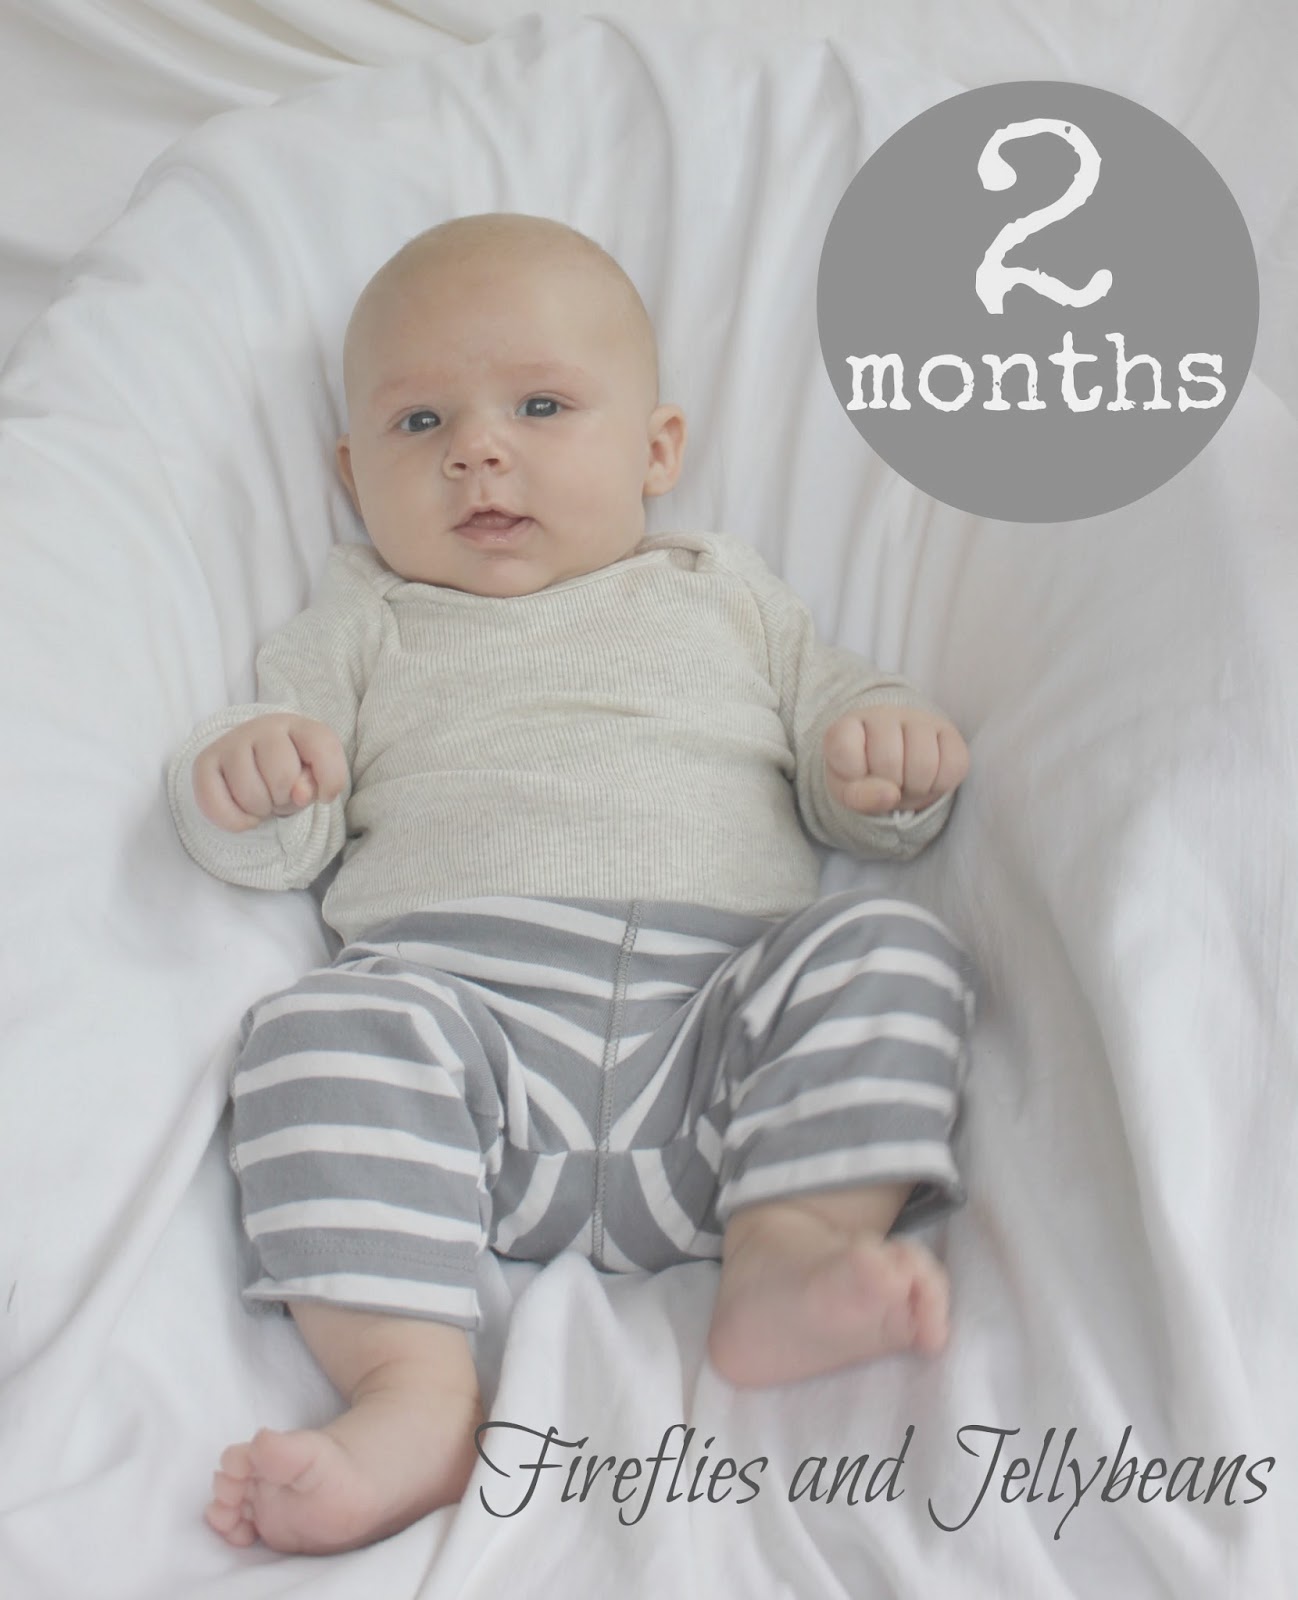 Fireflies and Jellybeans: Baby Boy 2 months